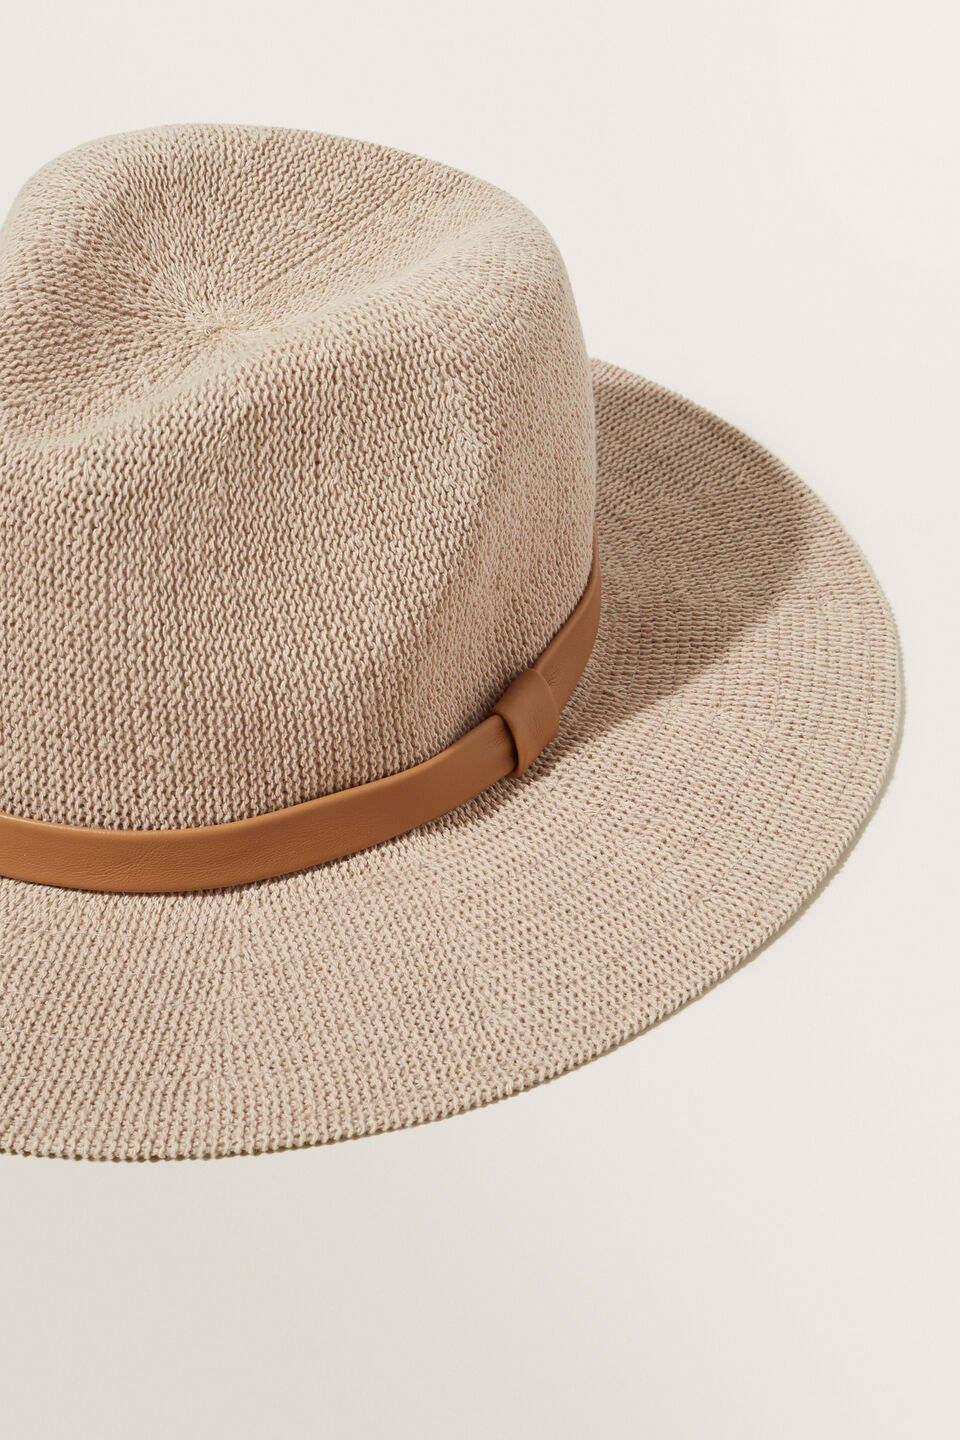 Lightweight Panama Hat  Neutral Blush